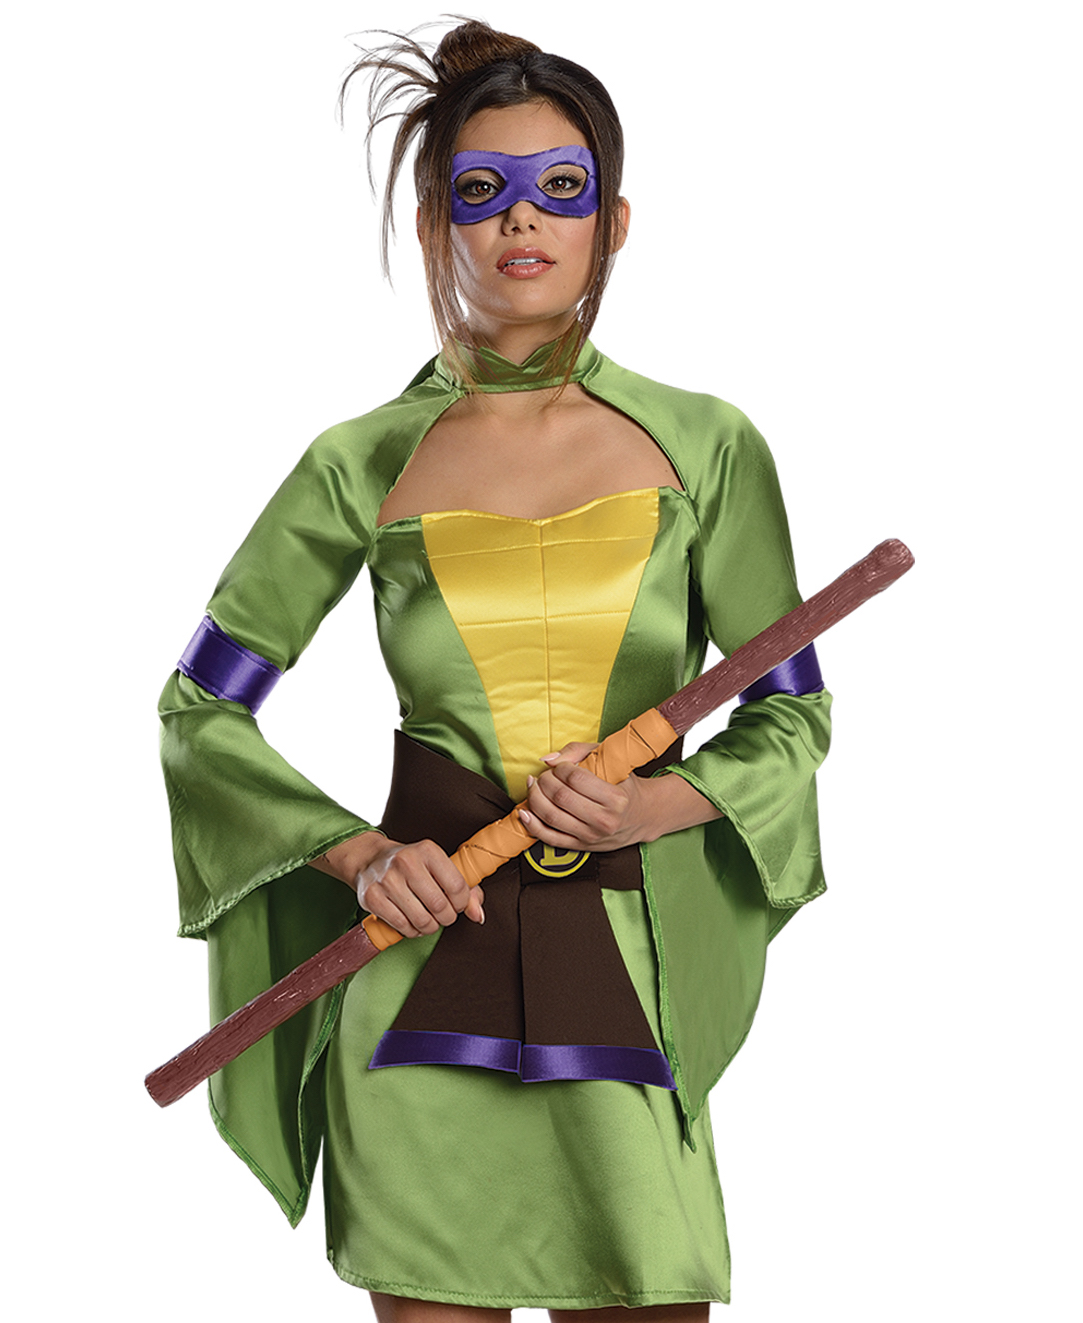 Worst Sexy Halloween Costumes - teenage mutant ninja turtle costume